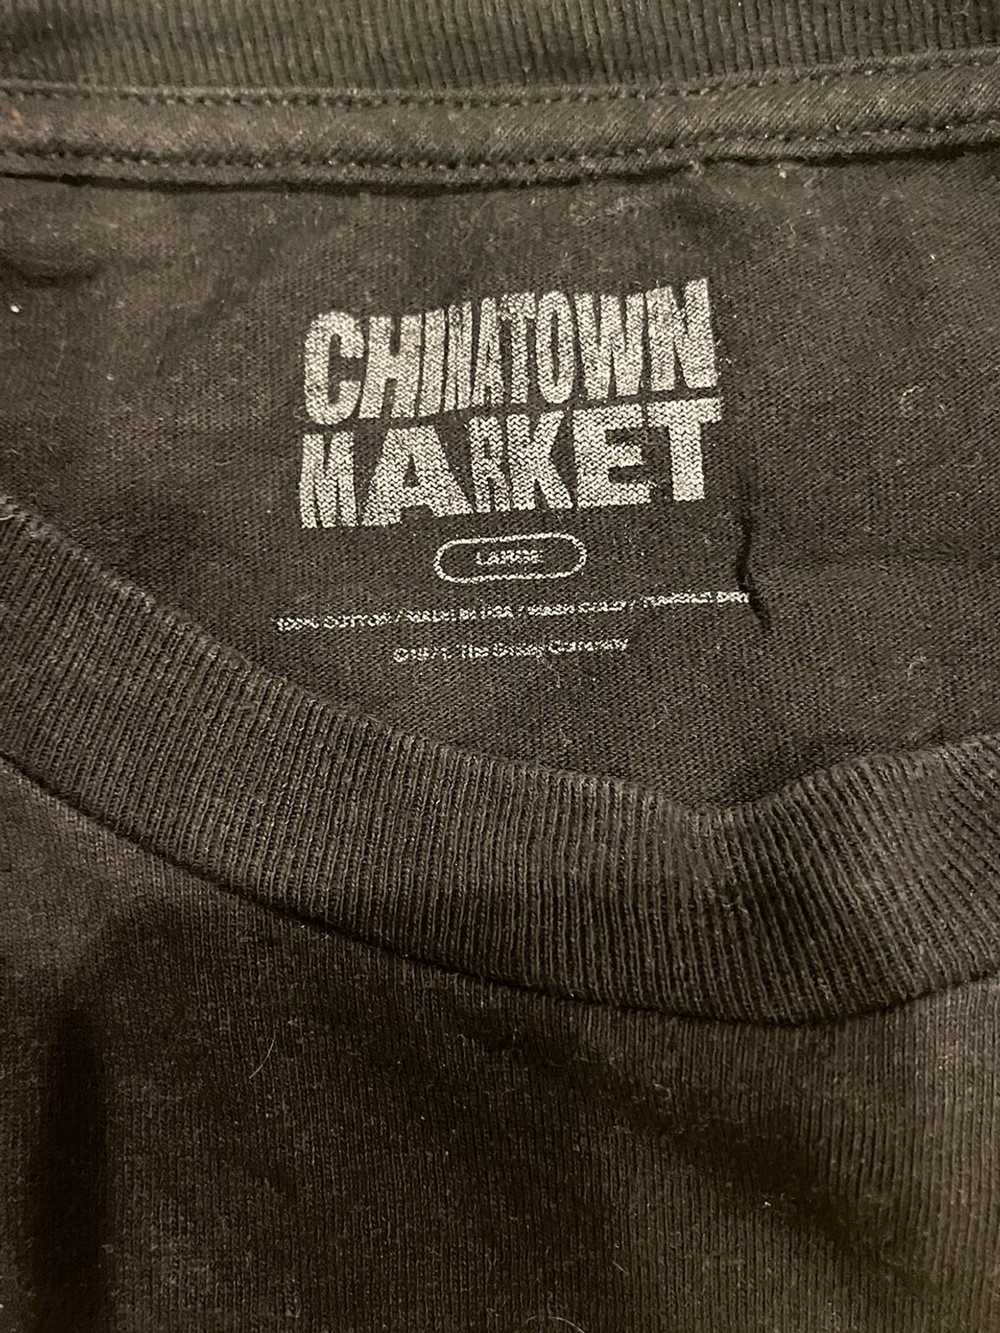 Streetwear Chinatown Market Shirt - image 3